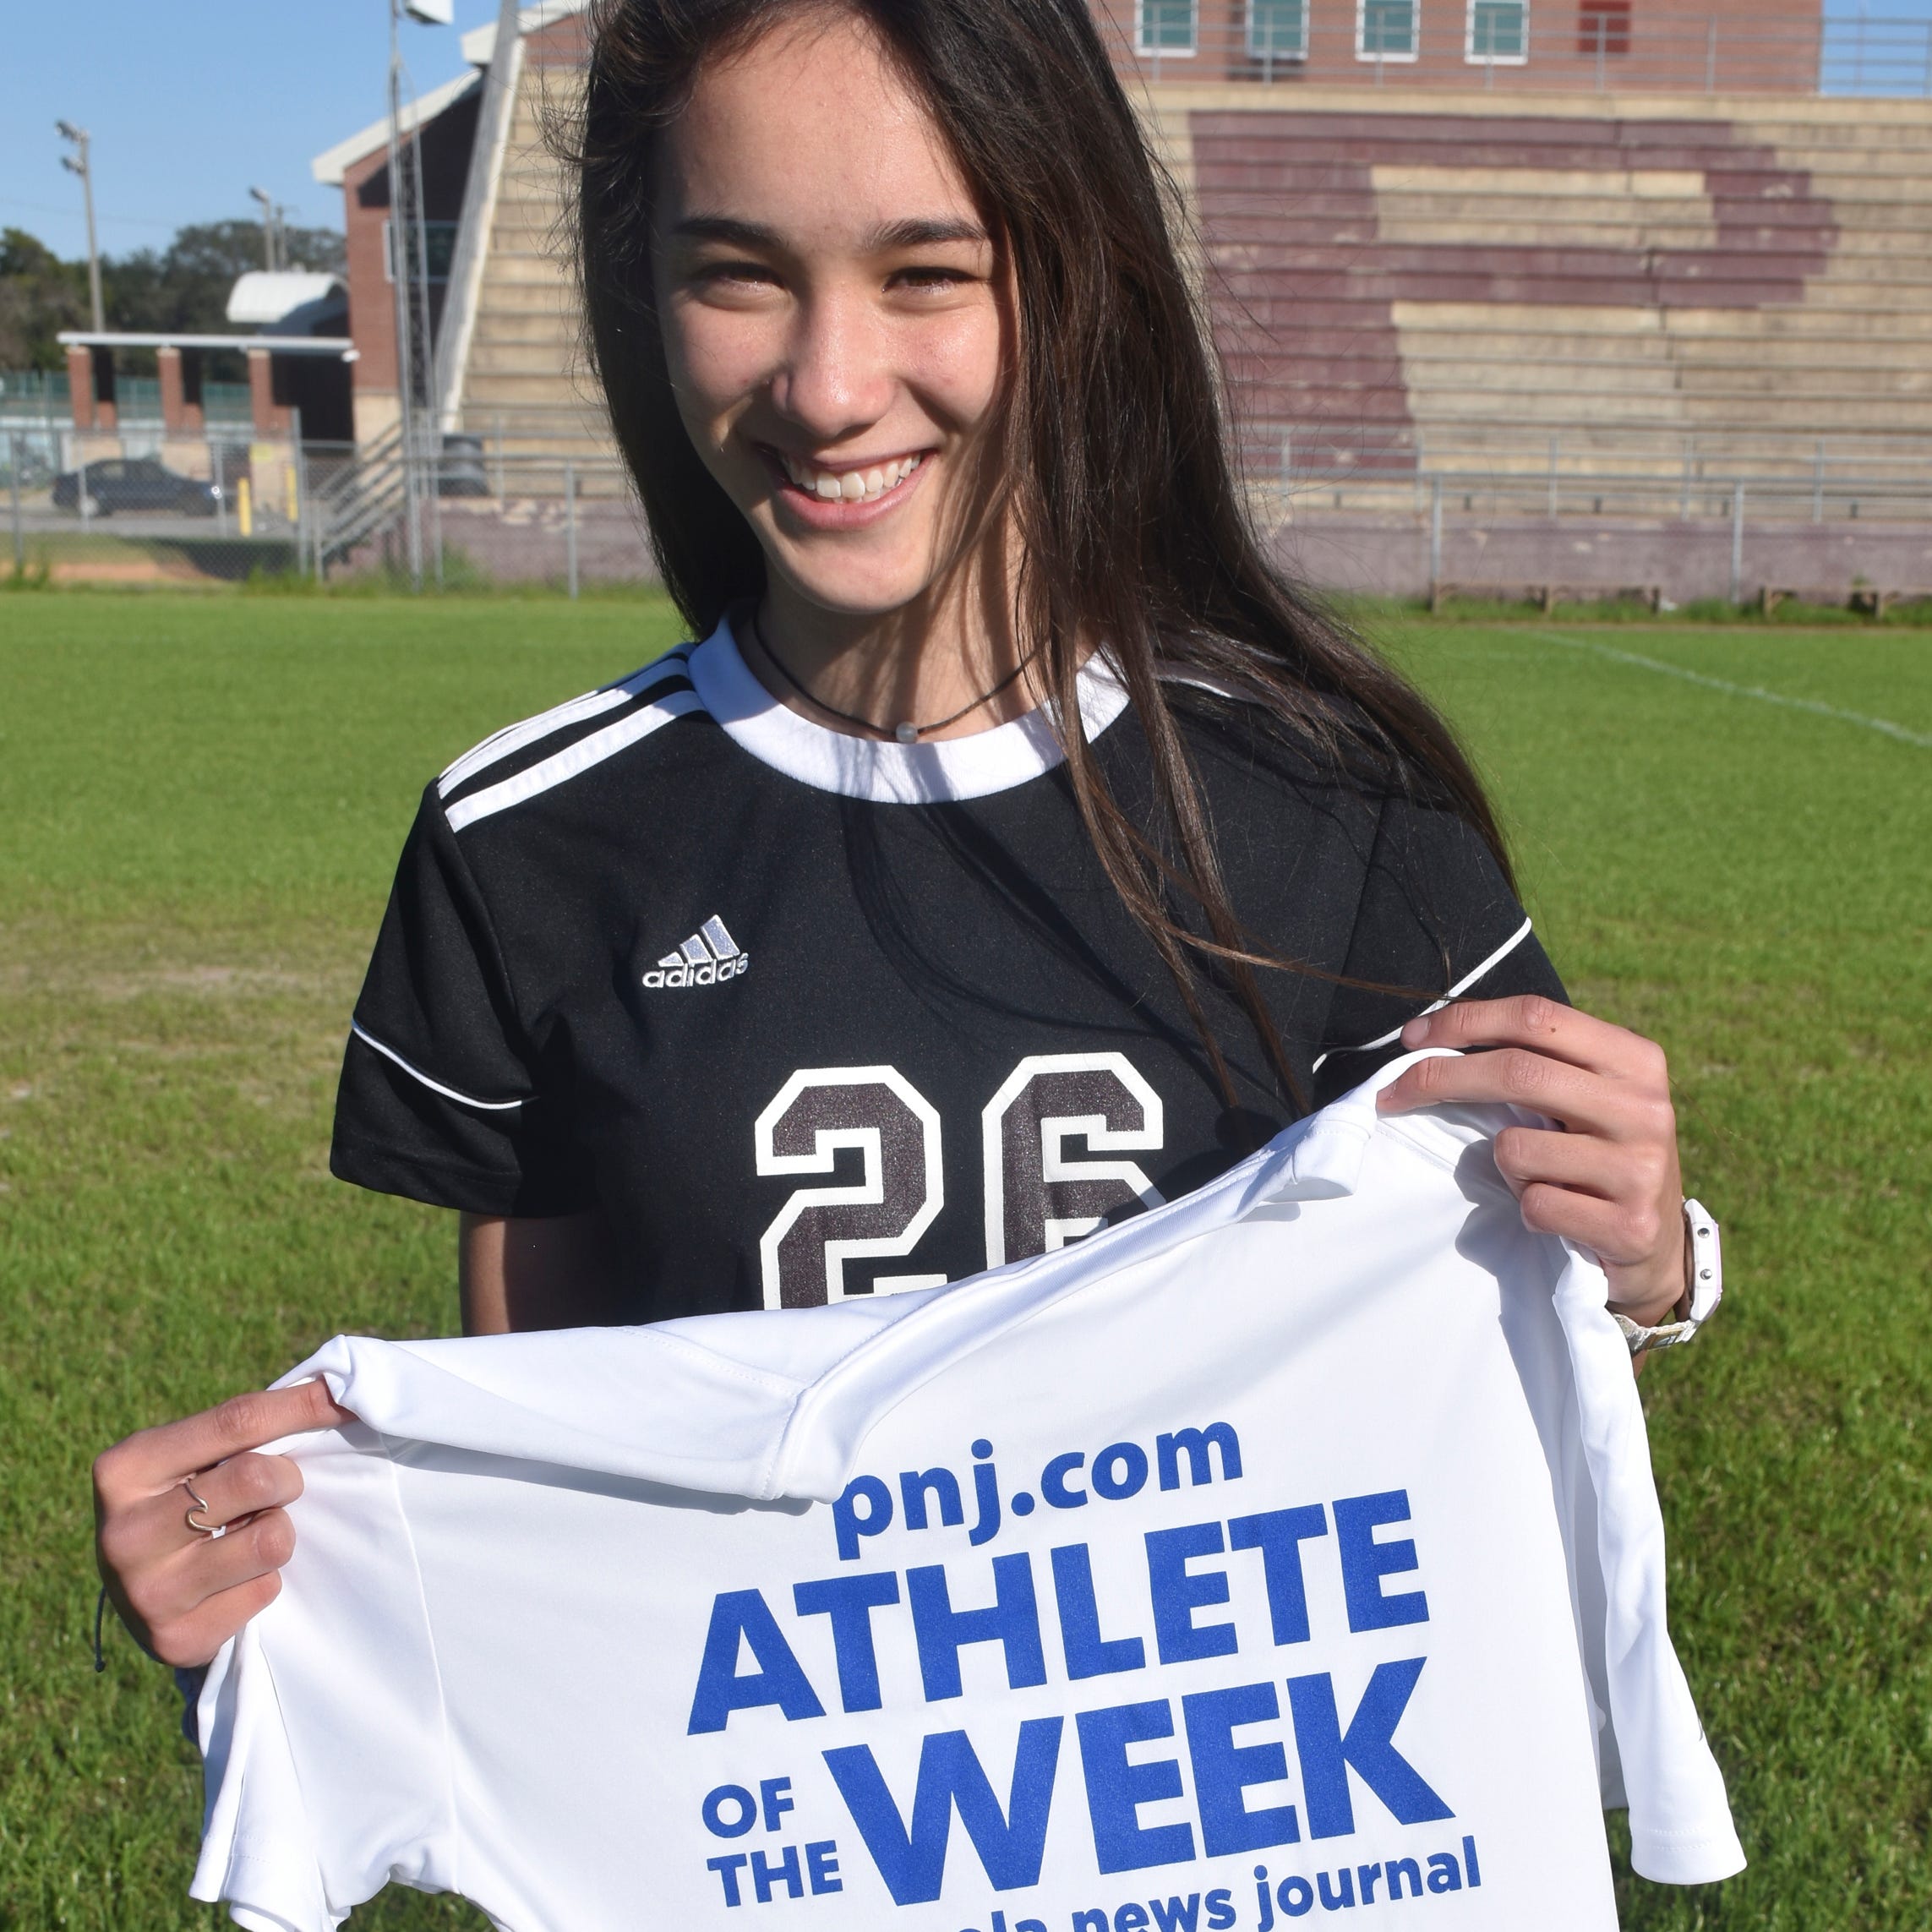 Athlete of the Week - Sophia Nguyen - Pensacola High School soccer player.